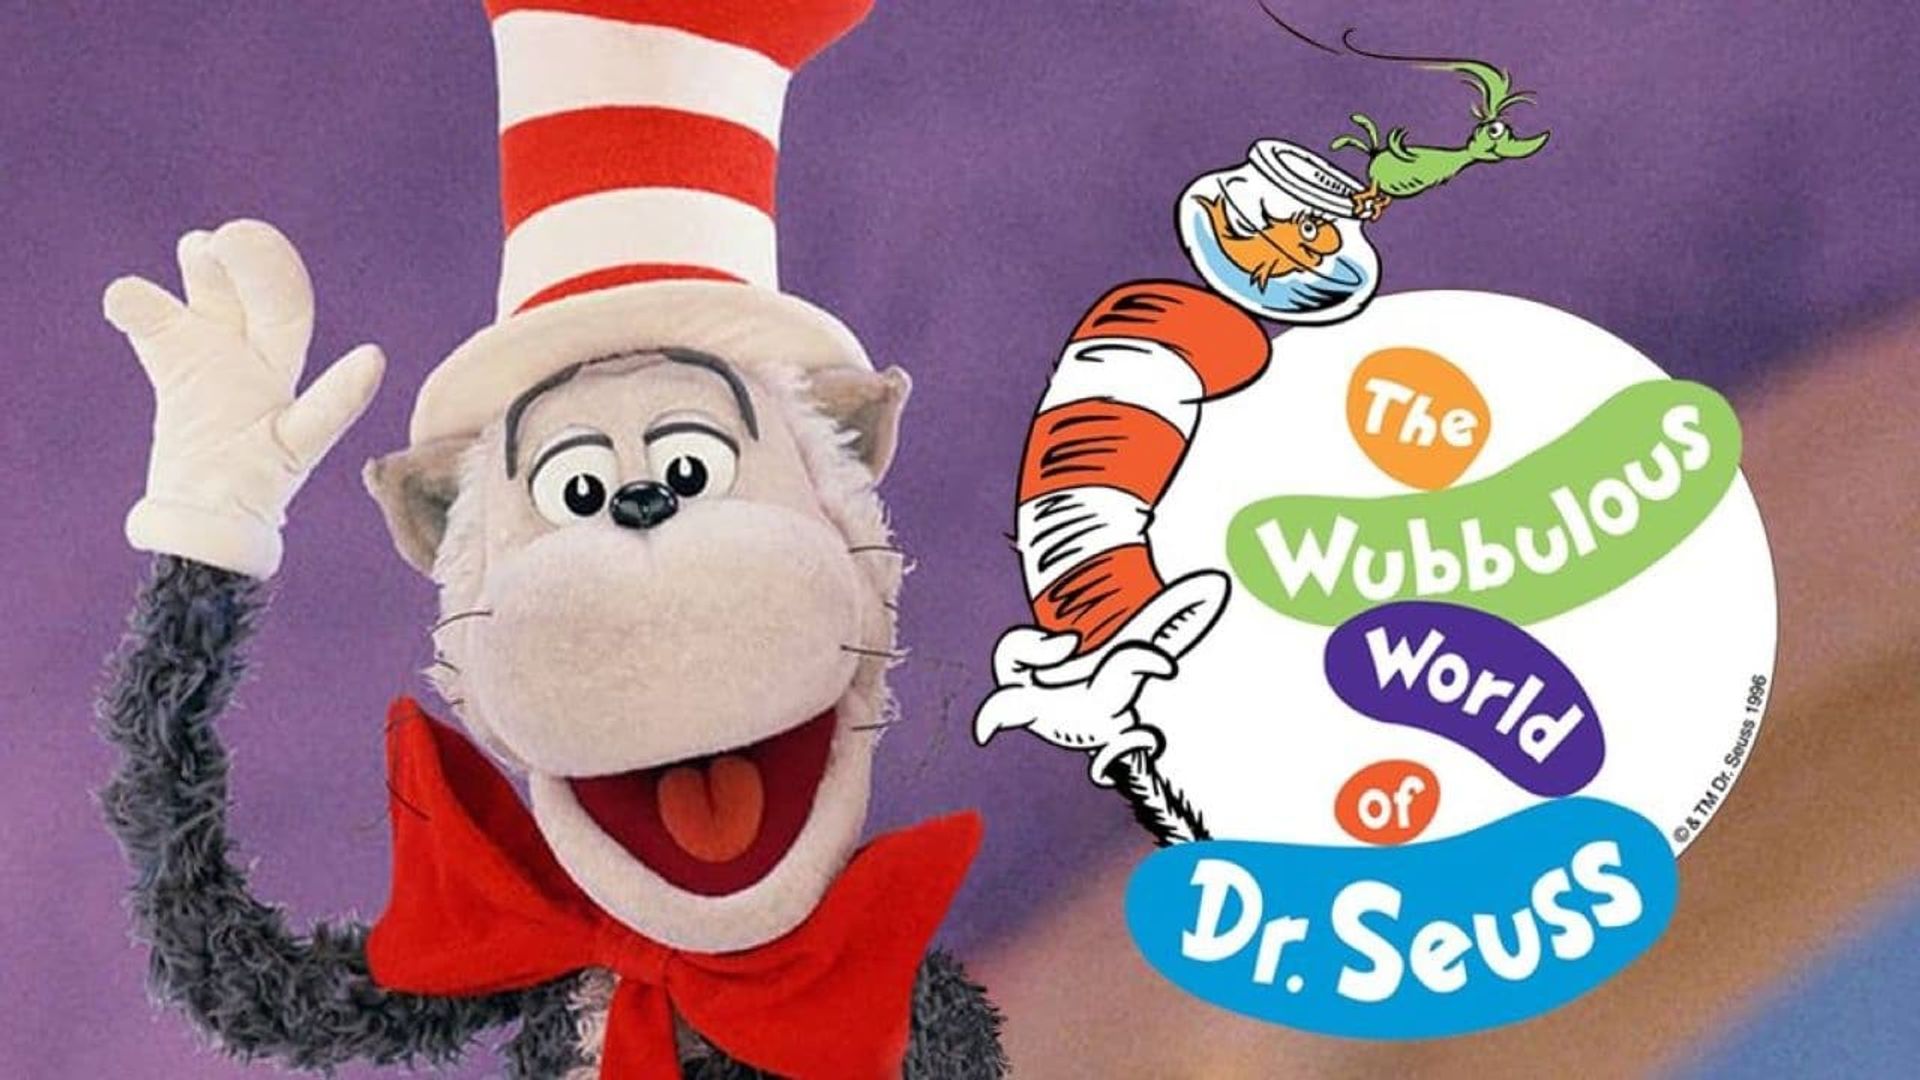 The Wubbulous World of Dr. Seuss background